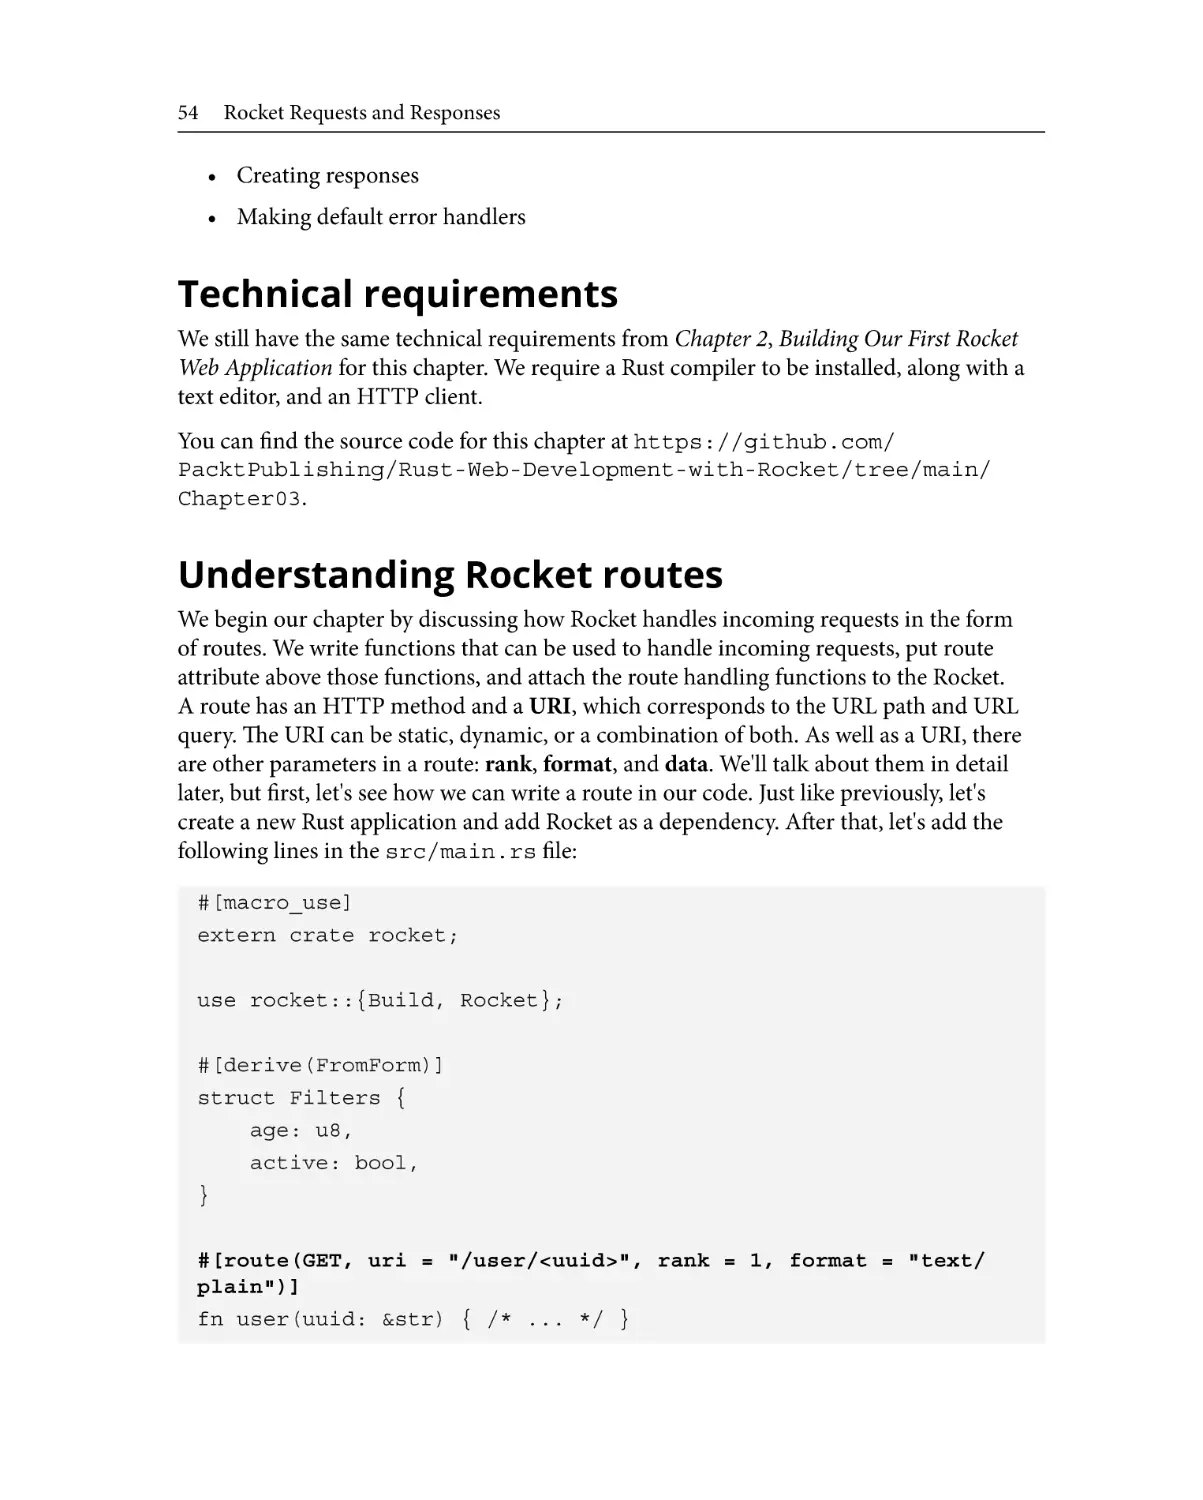 Technical requirements
Understanding Rocket routes